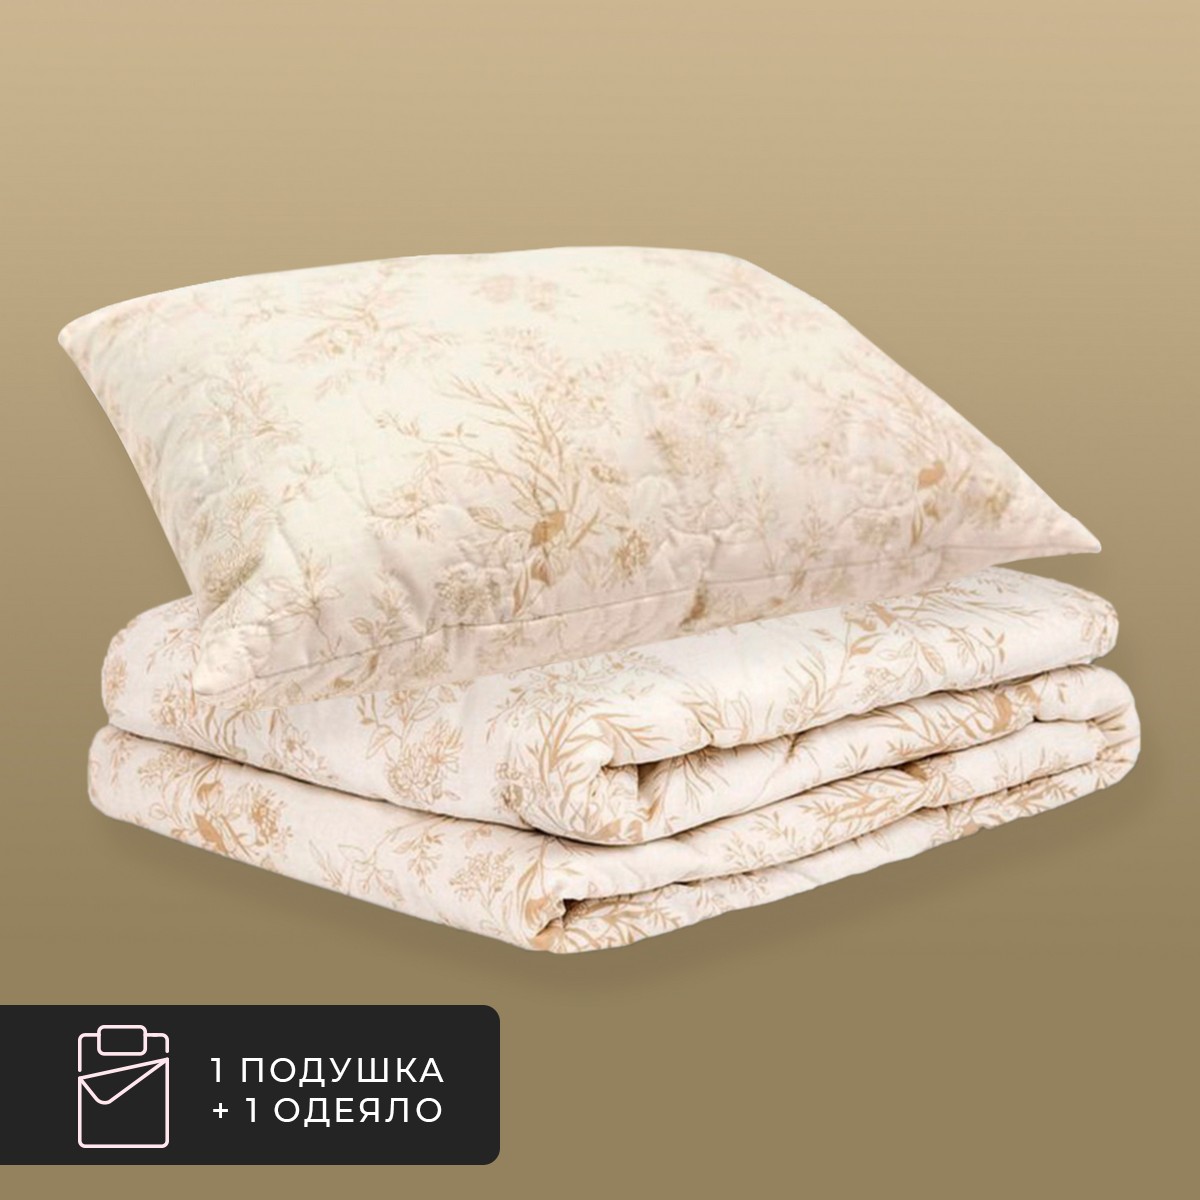 Набор 1 одеяло + 1 подушка Хлопок-натурэль, хлопковое волокно в хлопковом тике (140х200, 70х70) CLASSIC BY T